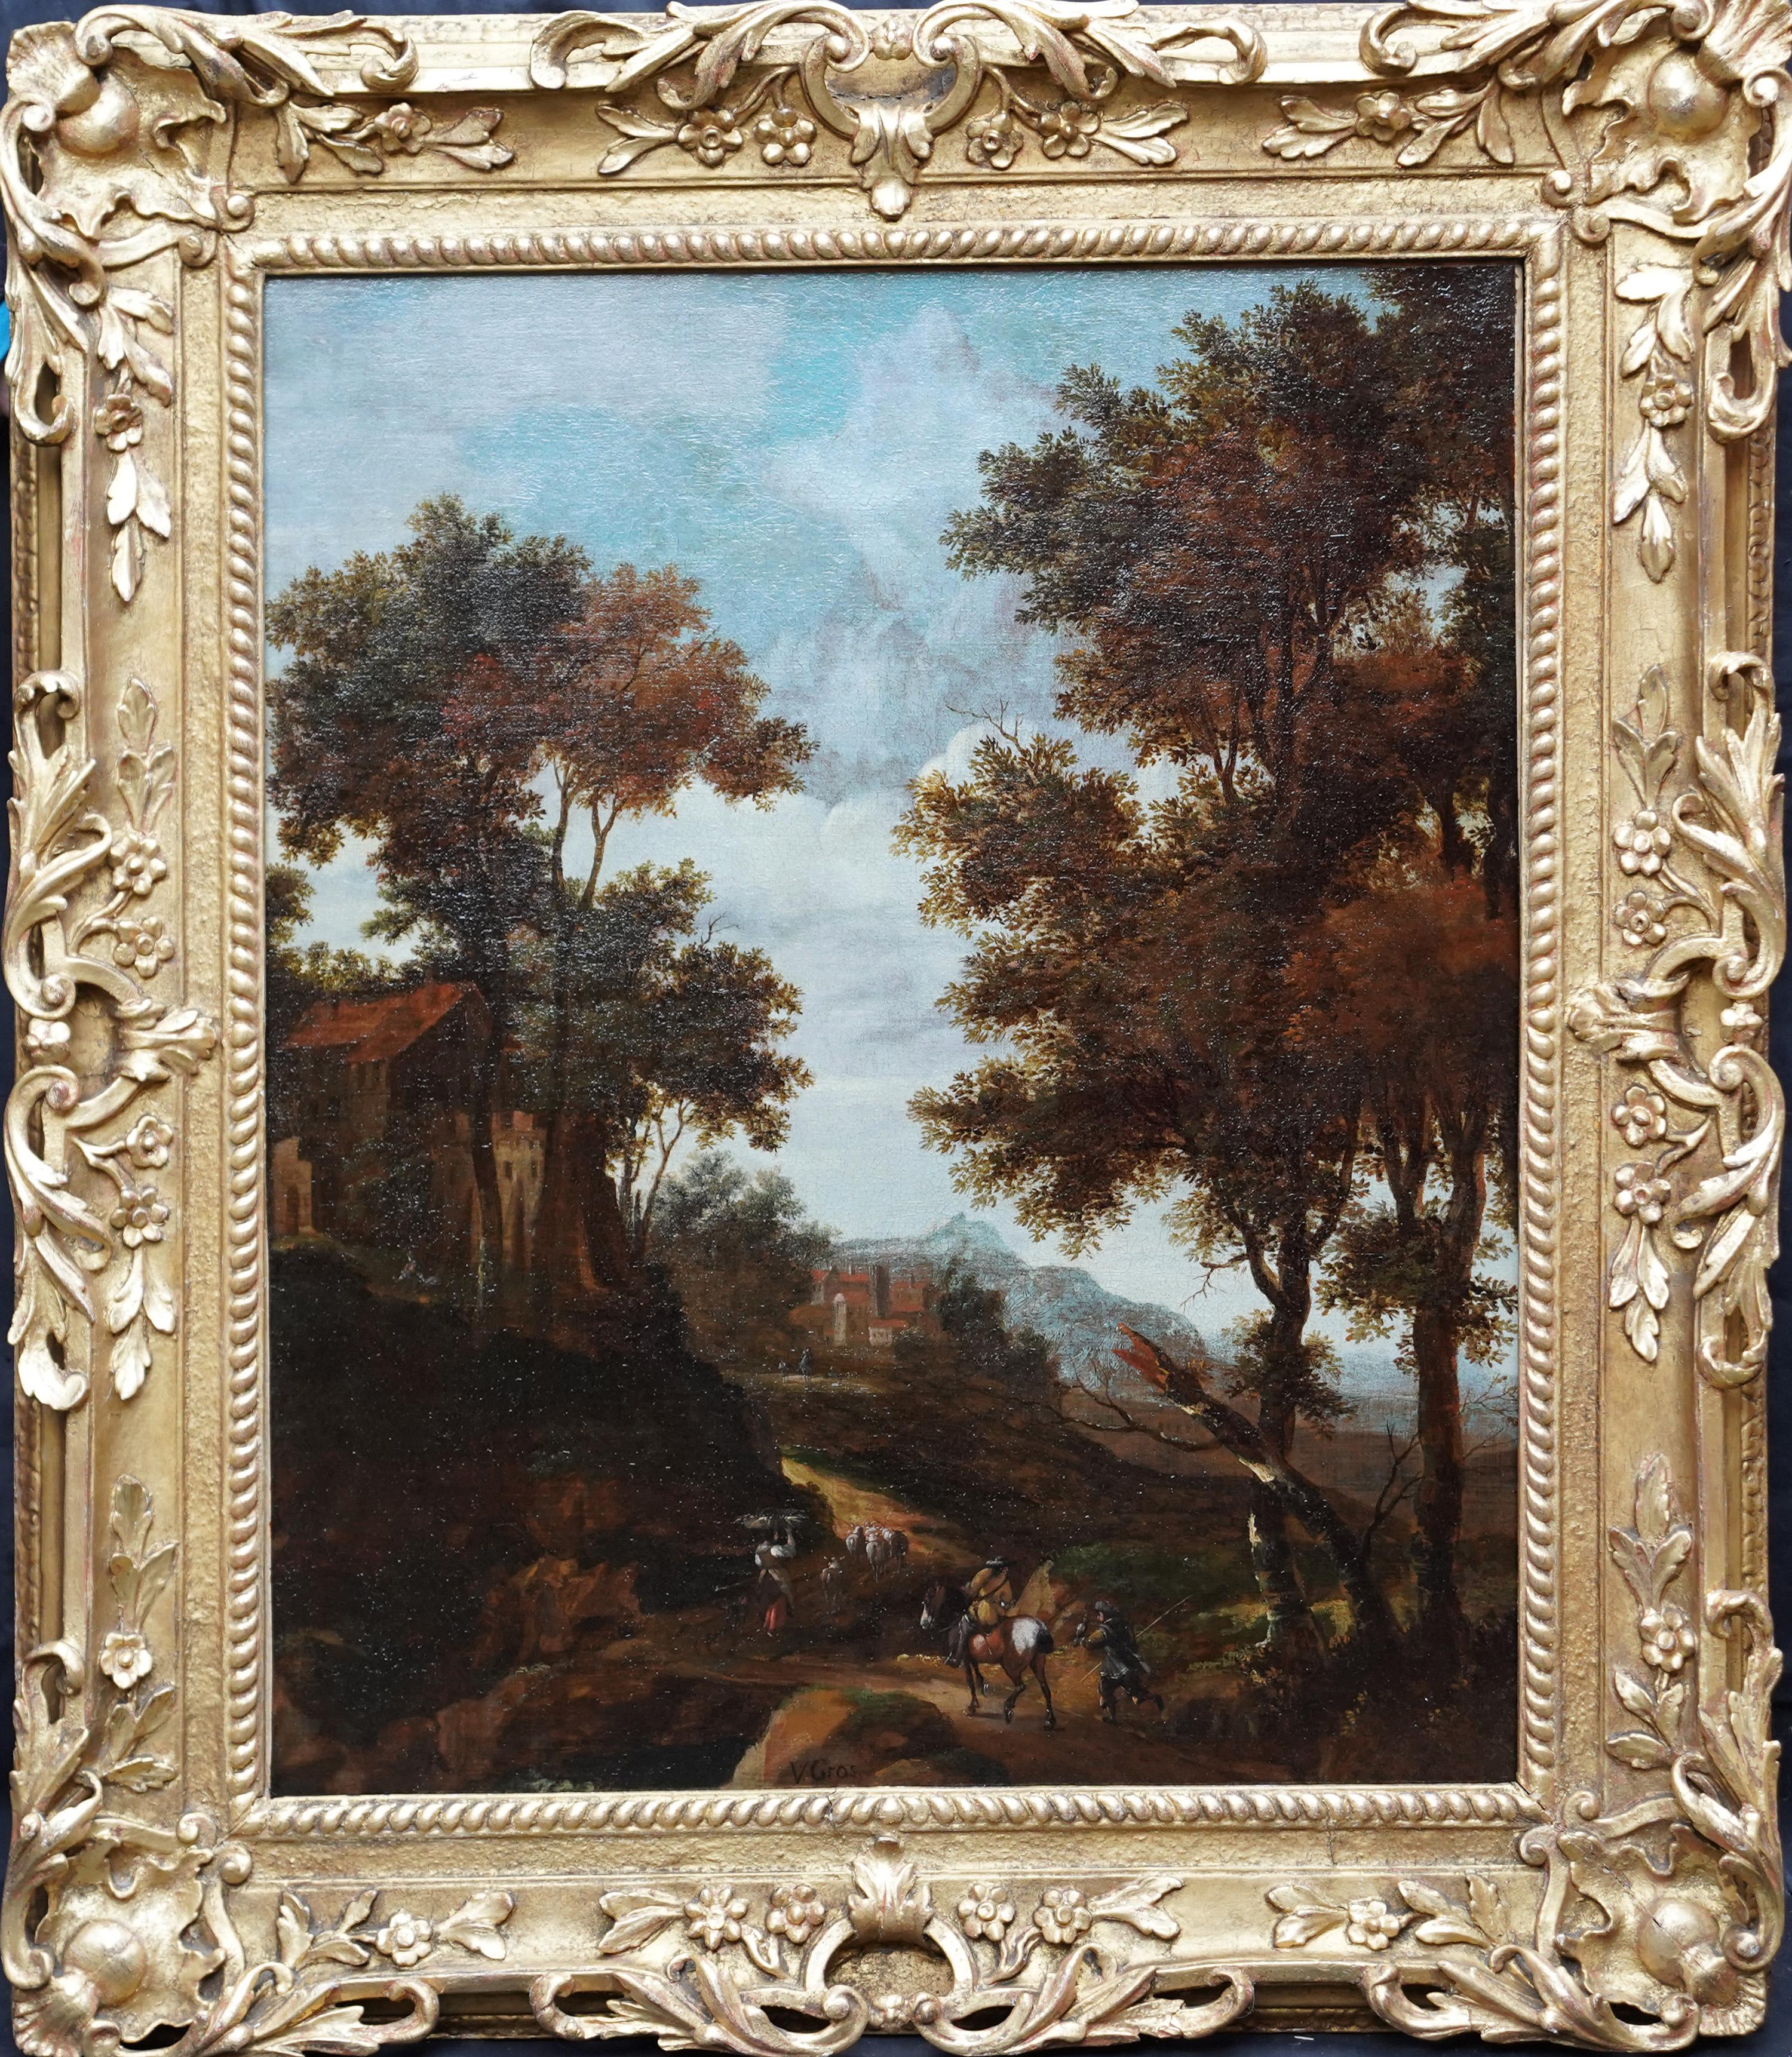 Jacob van der Croos Landscape Painting - Italian Landscape with Travellers - Dutch Golden Age 17thC art oil painting